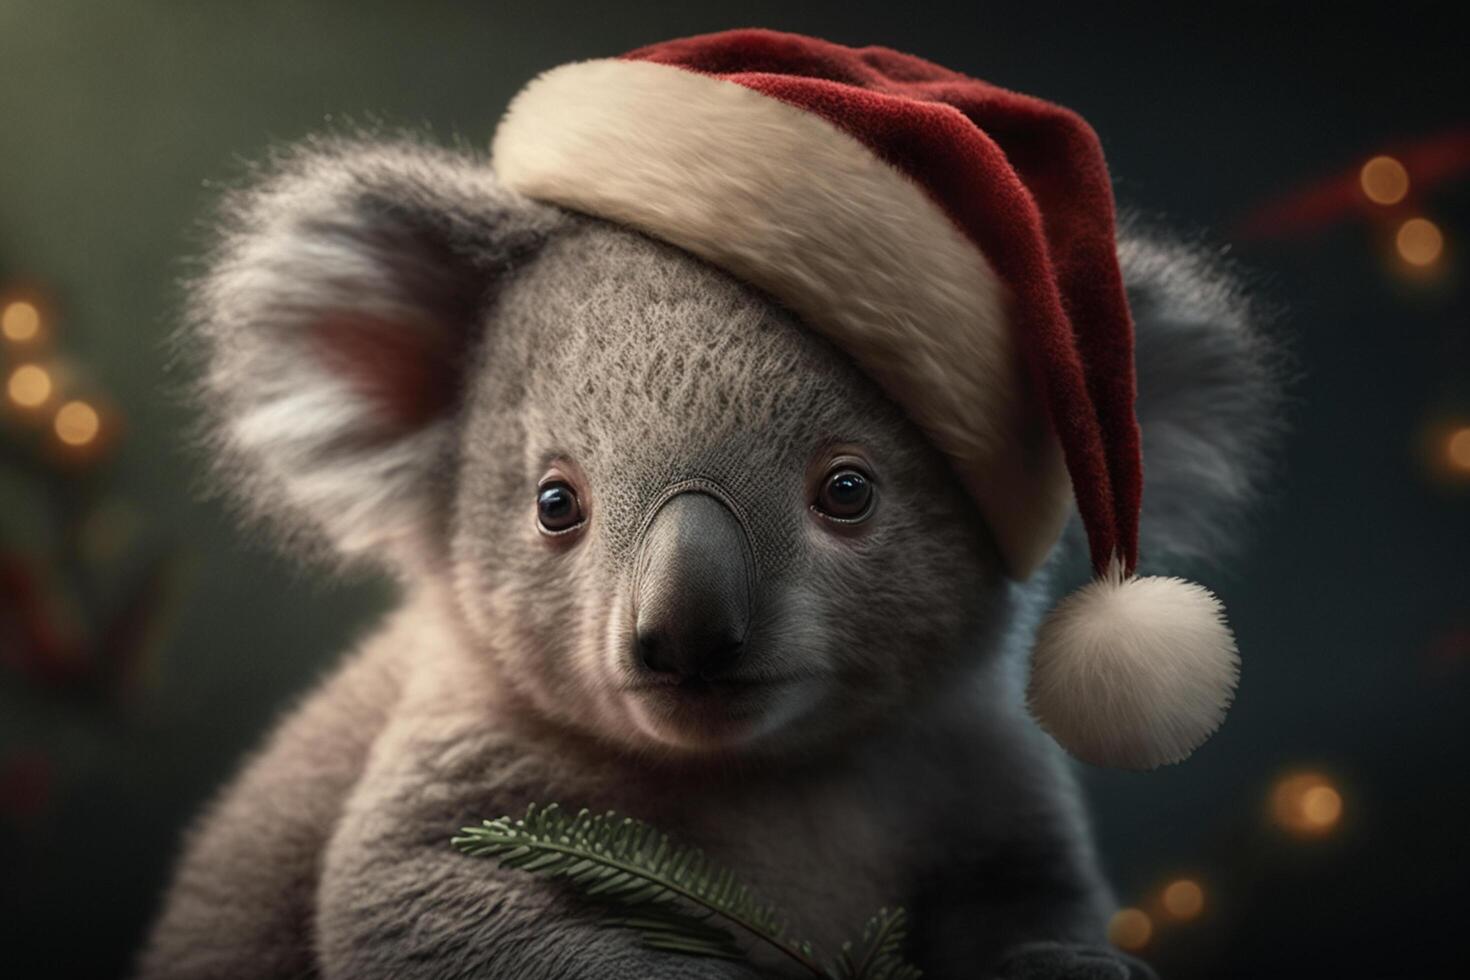 coala vestindo papai noel santa chapéu em Natal véspera ai gerado conteúdo foto